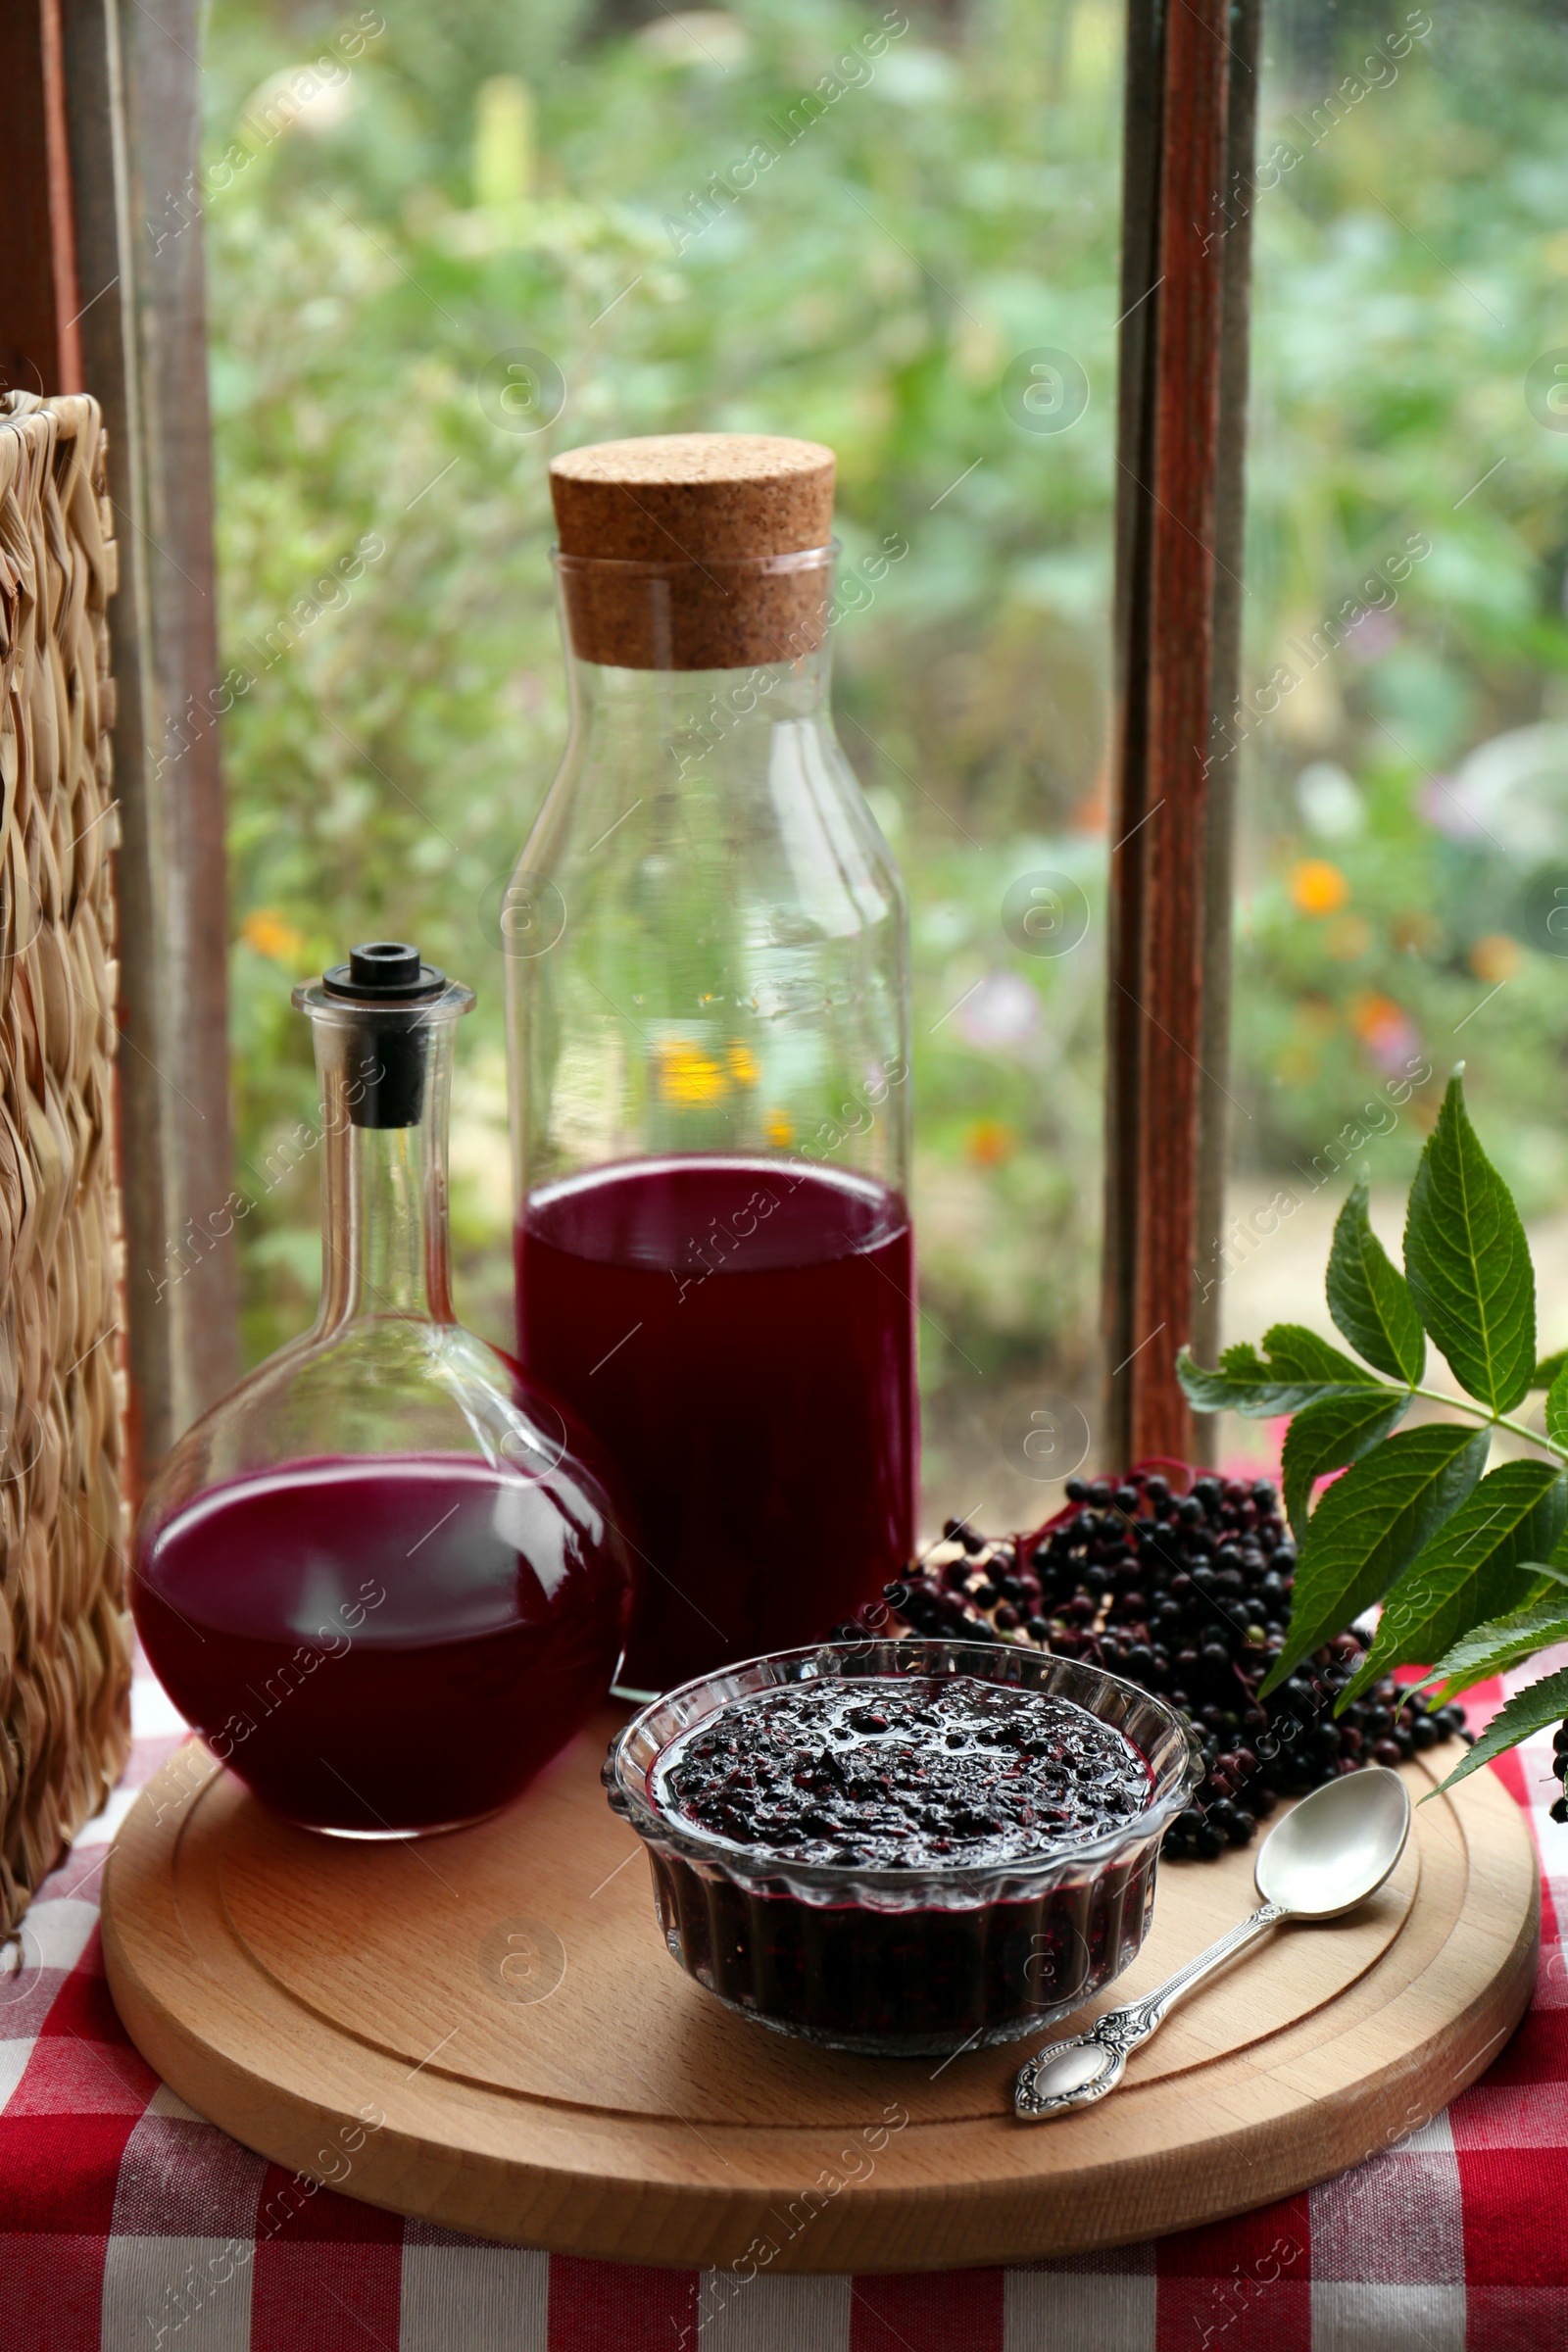 Photo of Elderberry jam and drink with Sambucus berries on table near window